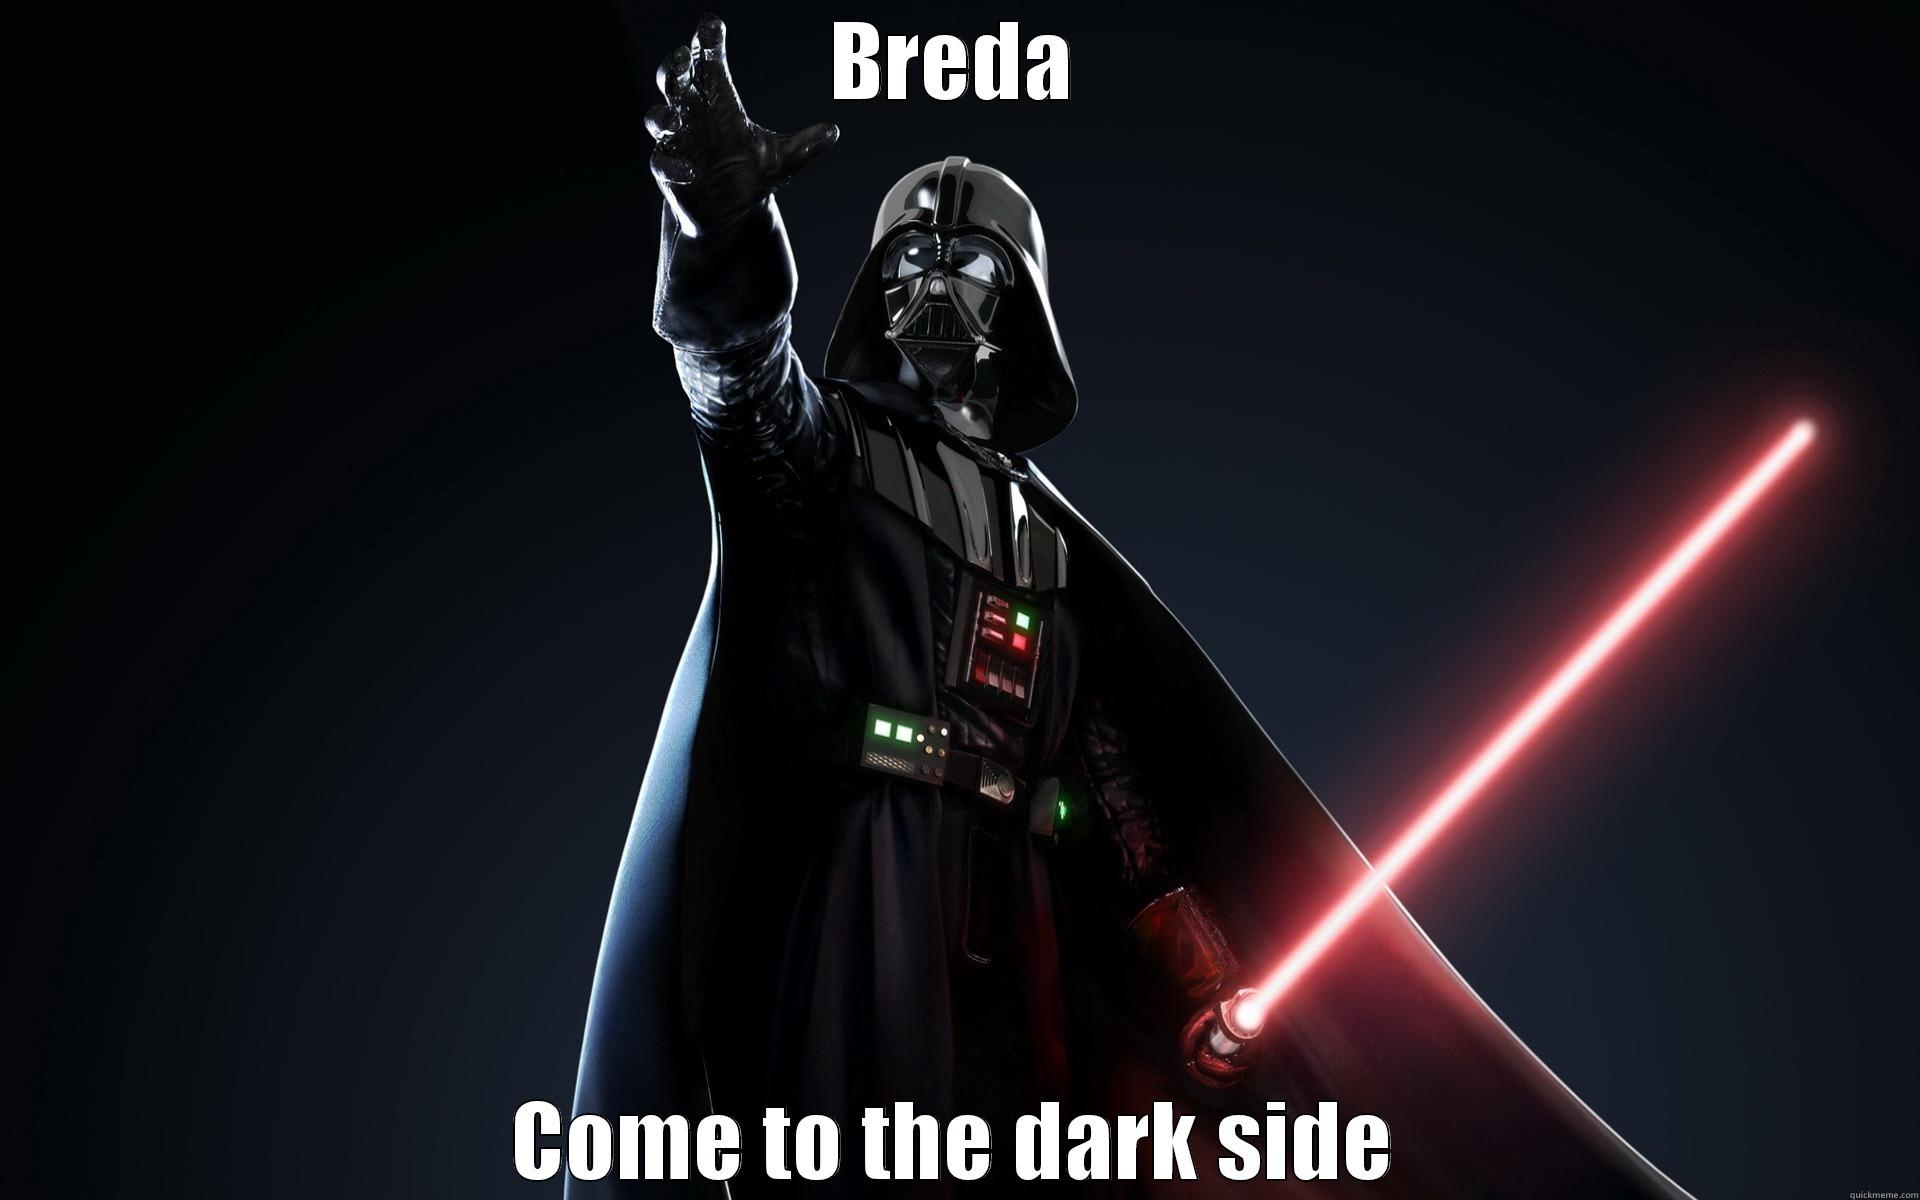 Darth Vader meme - BREDA COME TO THE DARK SIDE Misc